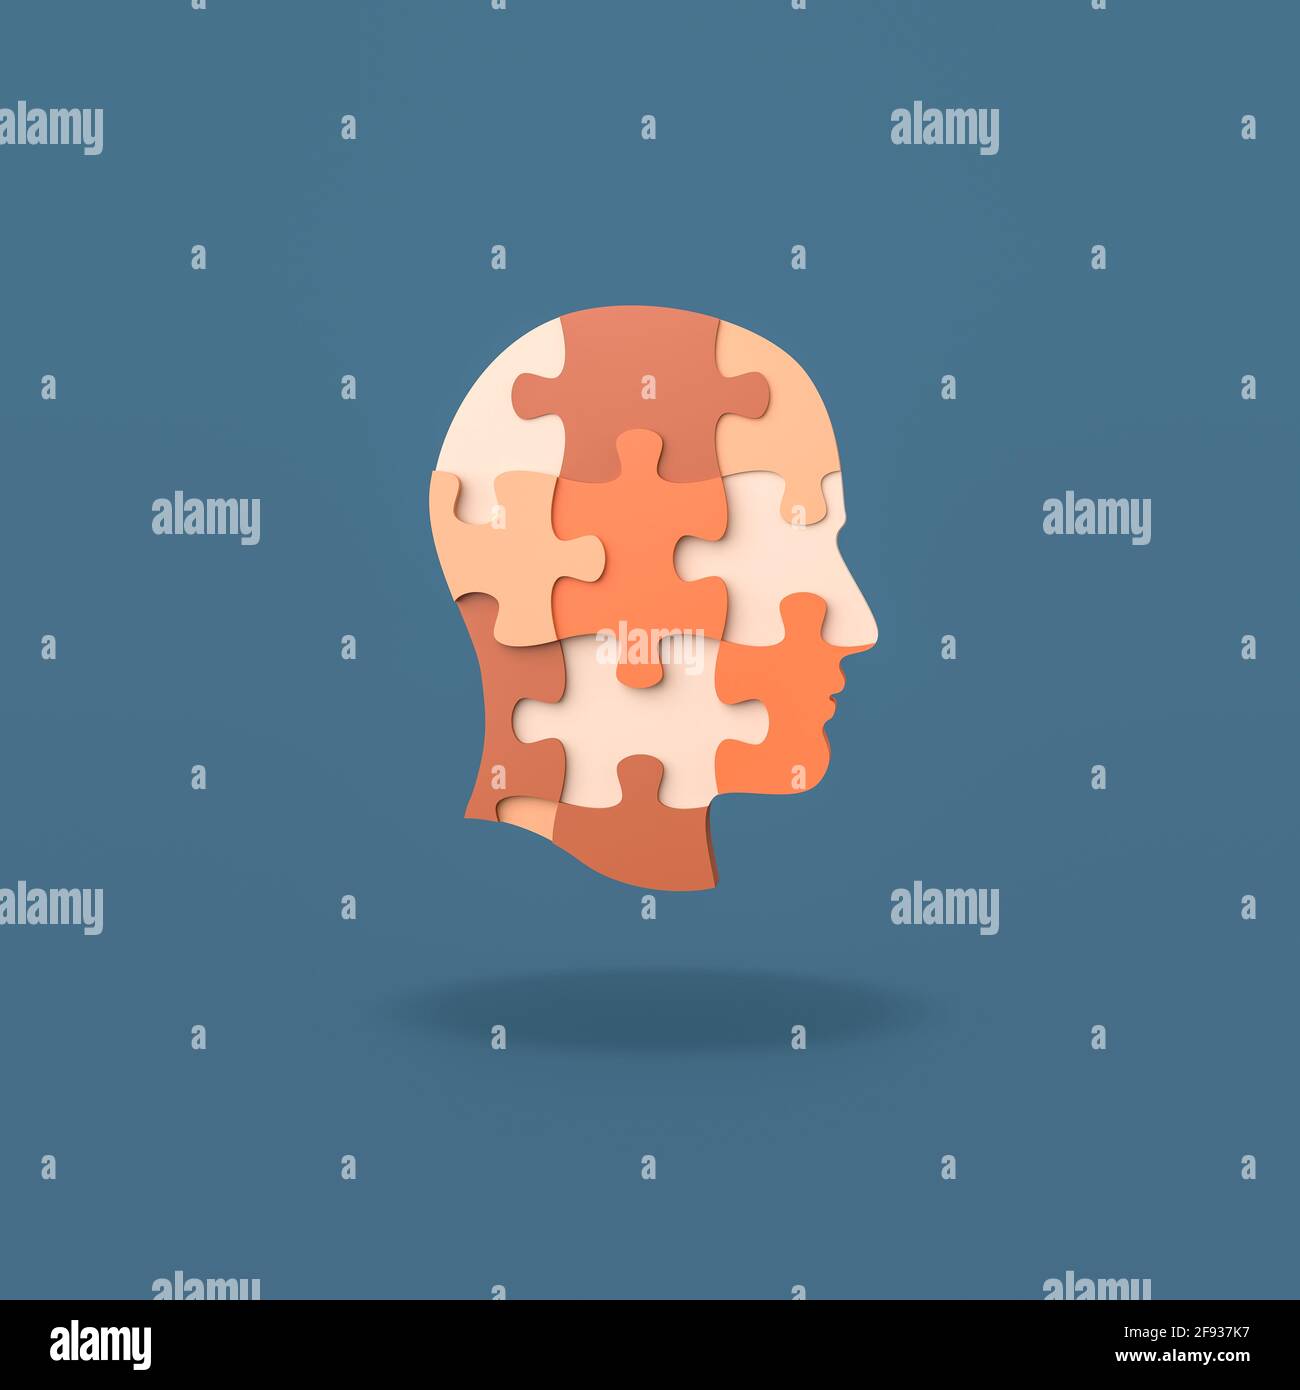 Human Puzzle Head Shape on Blue Background Stock Photo